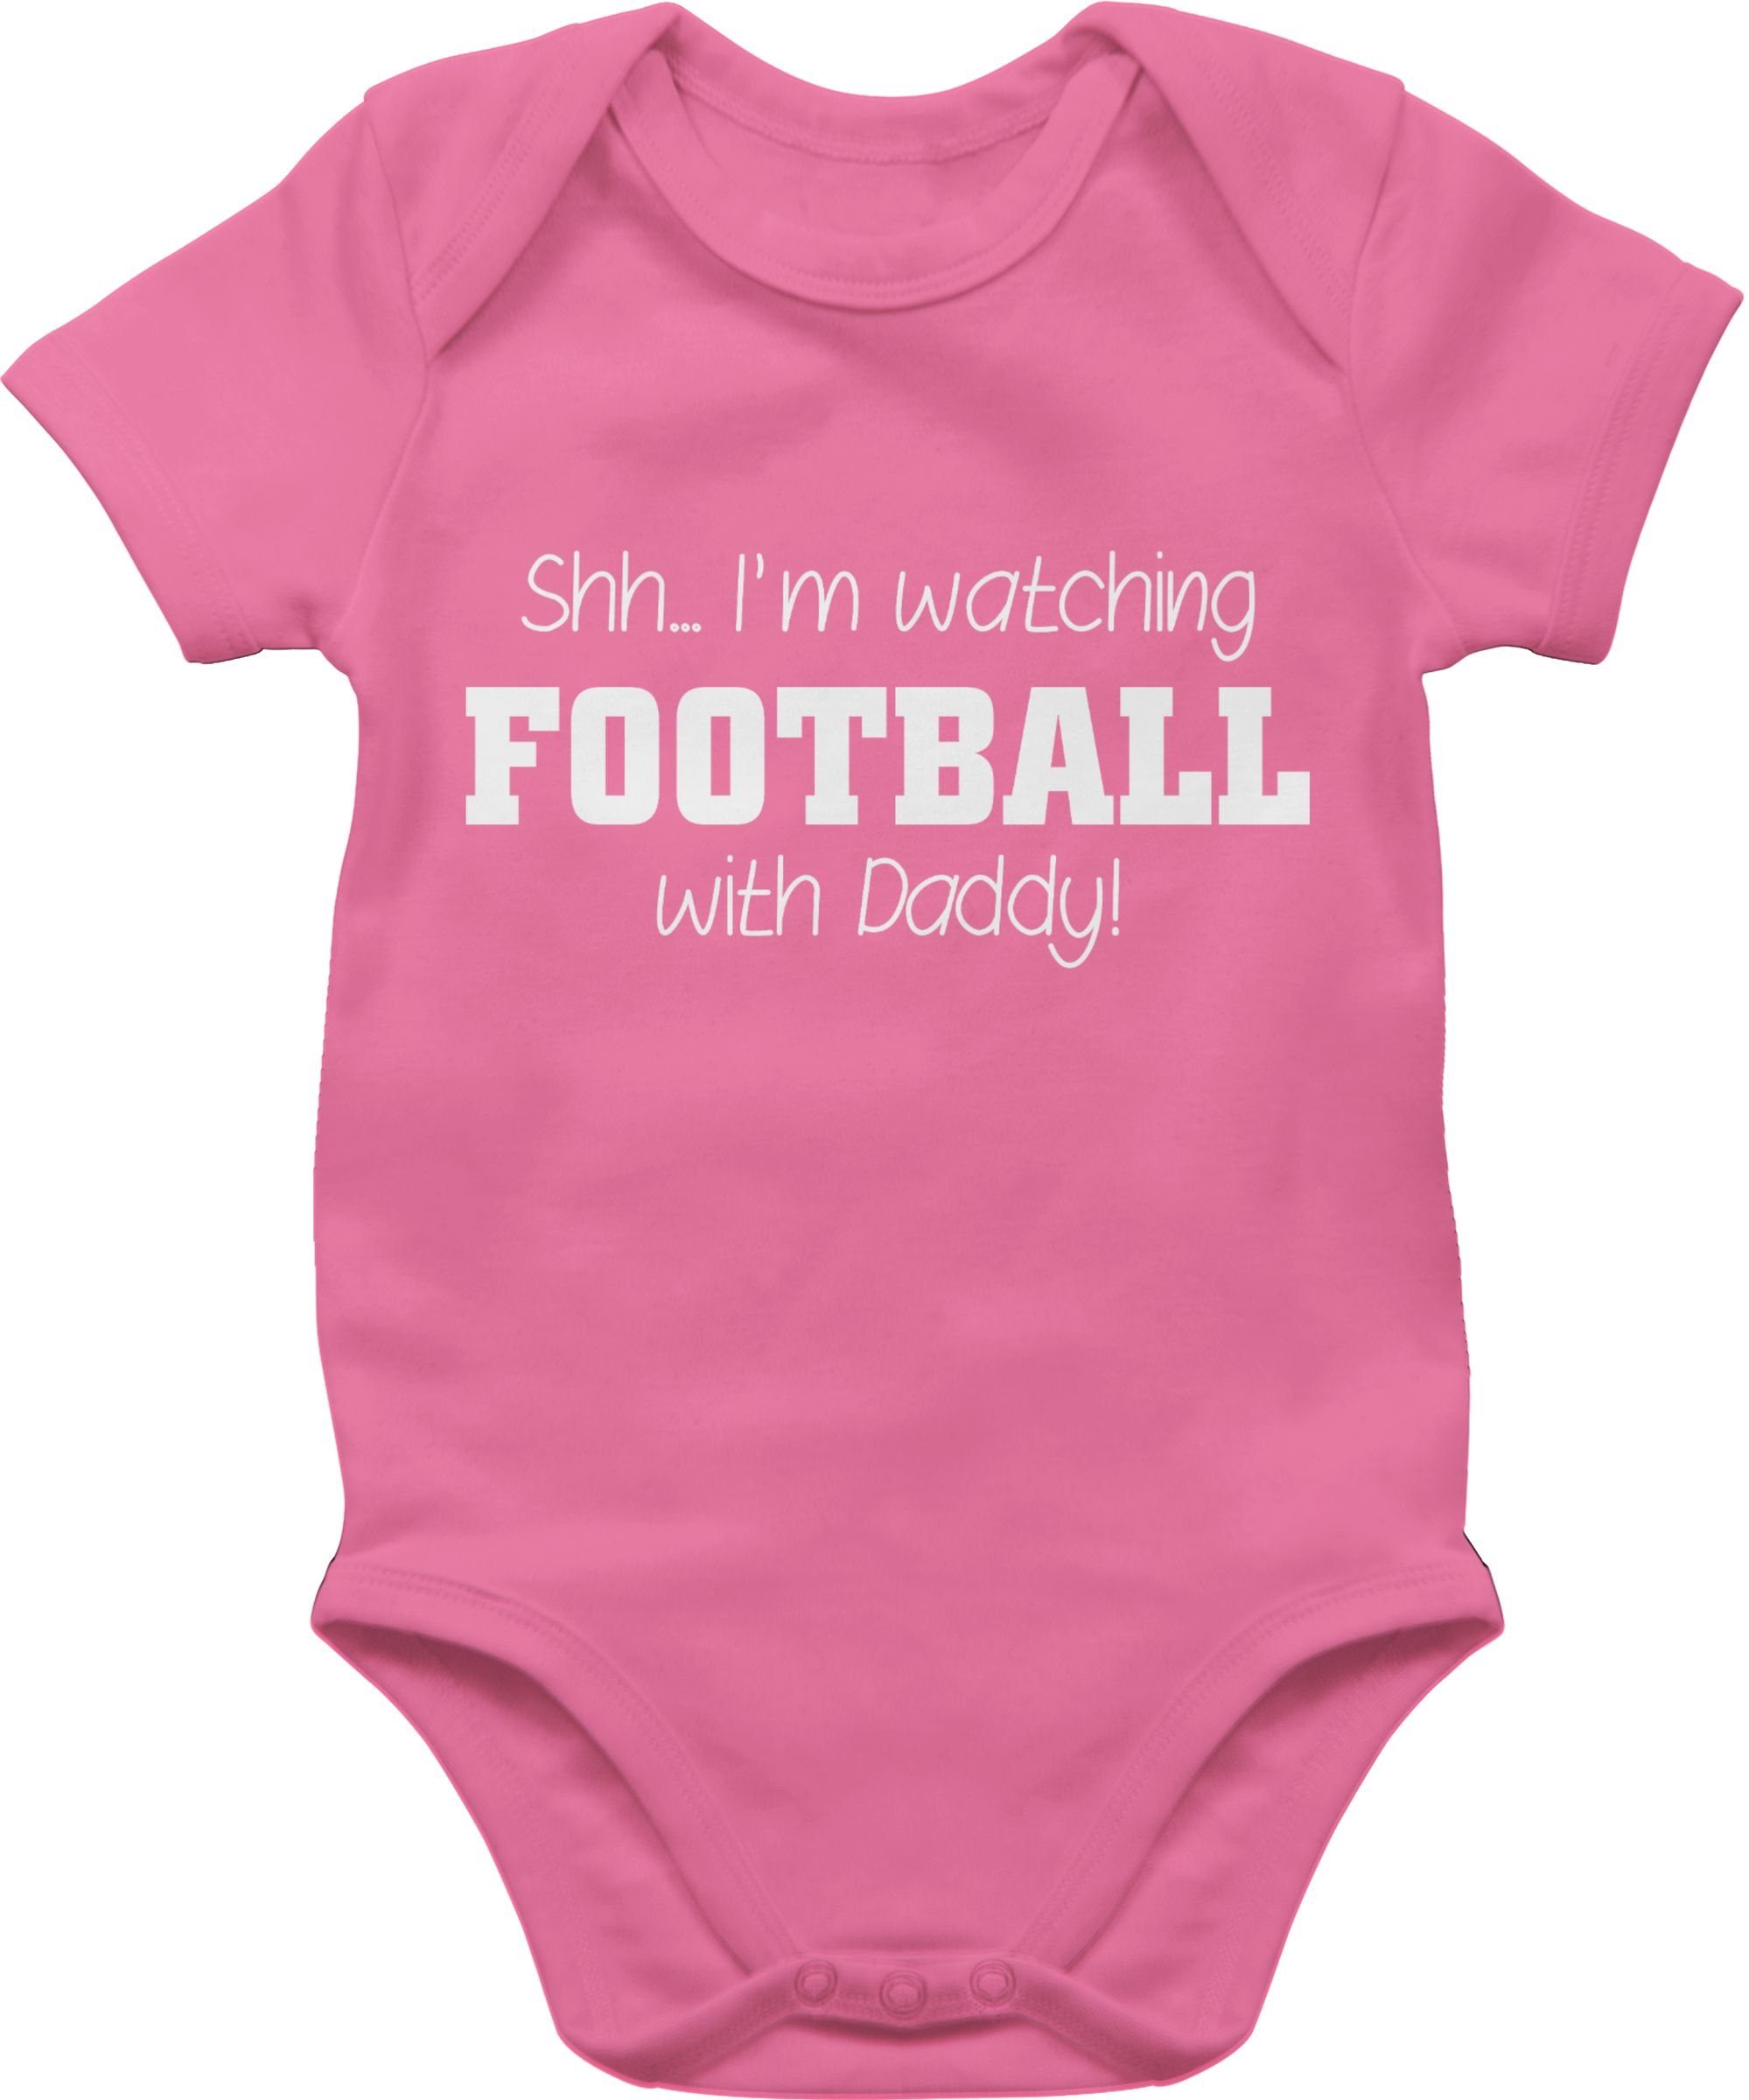 Shirtbody Daddy! football Baby with Bewegung 3 watching Shirtracer Pink & weiß Shh...I'm - Sport